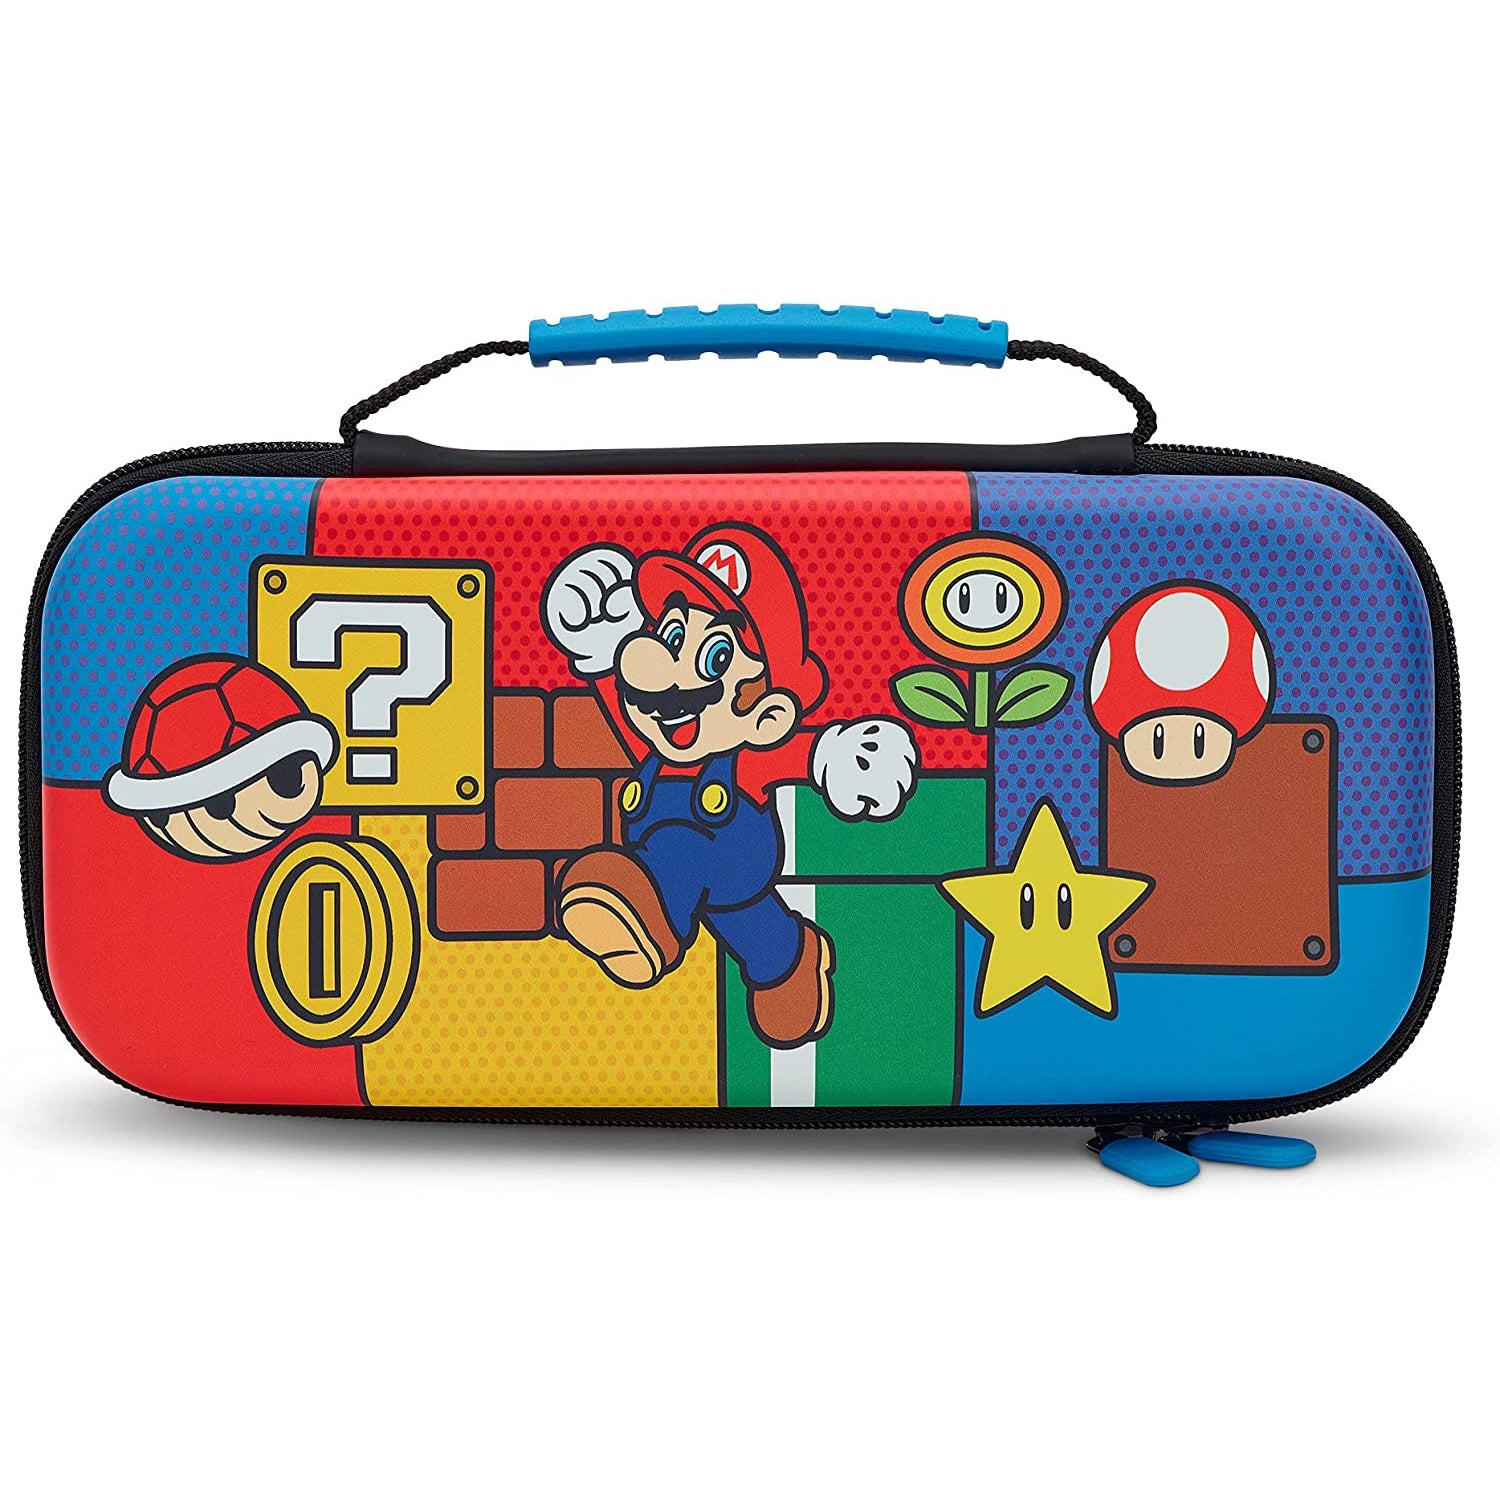 PowerA Protection Case for Nintendo Switch - Mario Pop